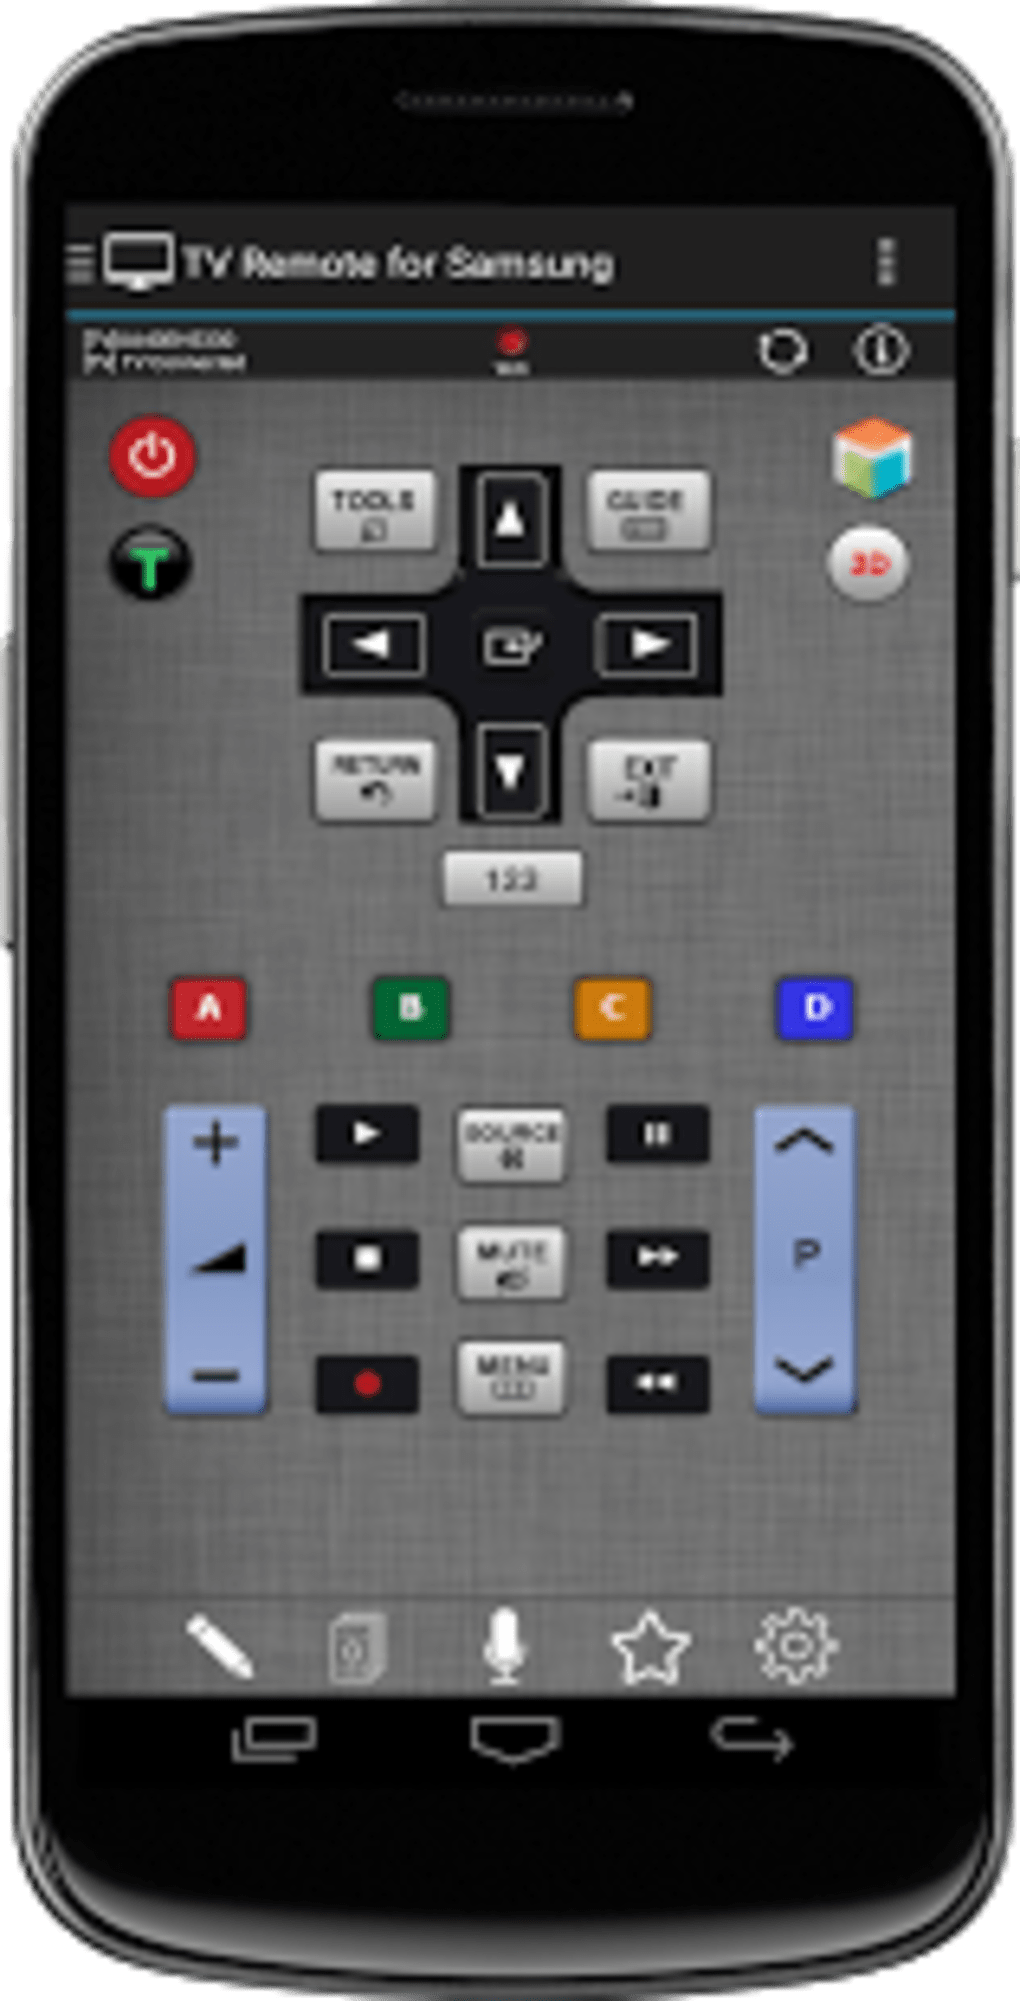 Sam TV Remote - Remote For SamSung TV APK for Android Download